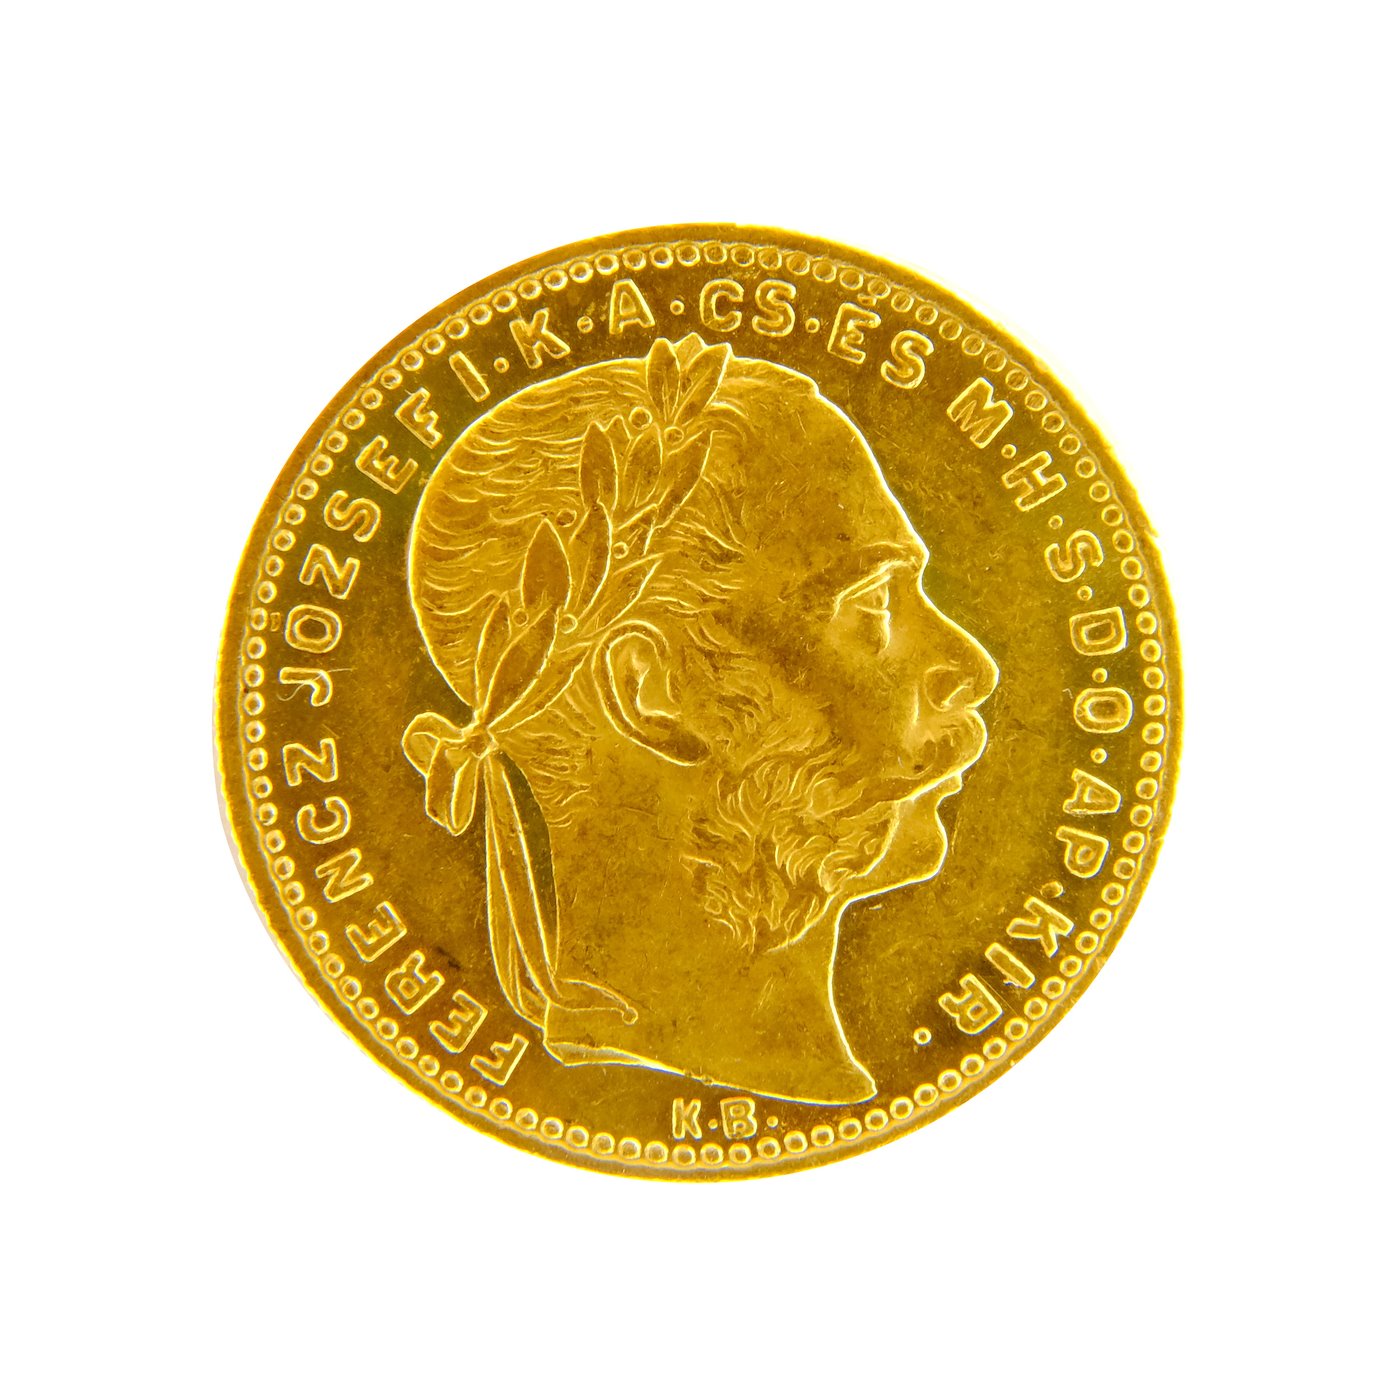 .. - Rakousko Uhersko zlatý 8 zlatník / 20 frank 1890 KB Kremnica, zlato 900/1000, hrubá hmotnost 6,45g